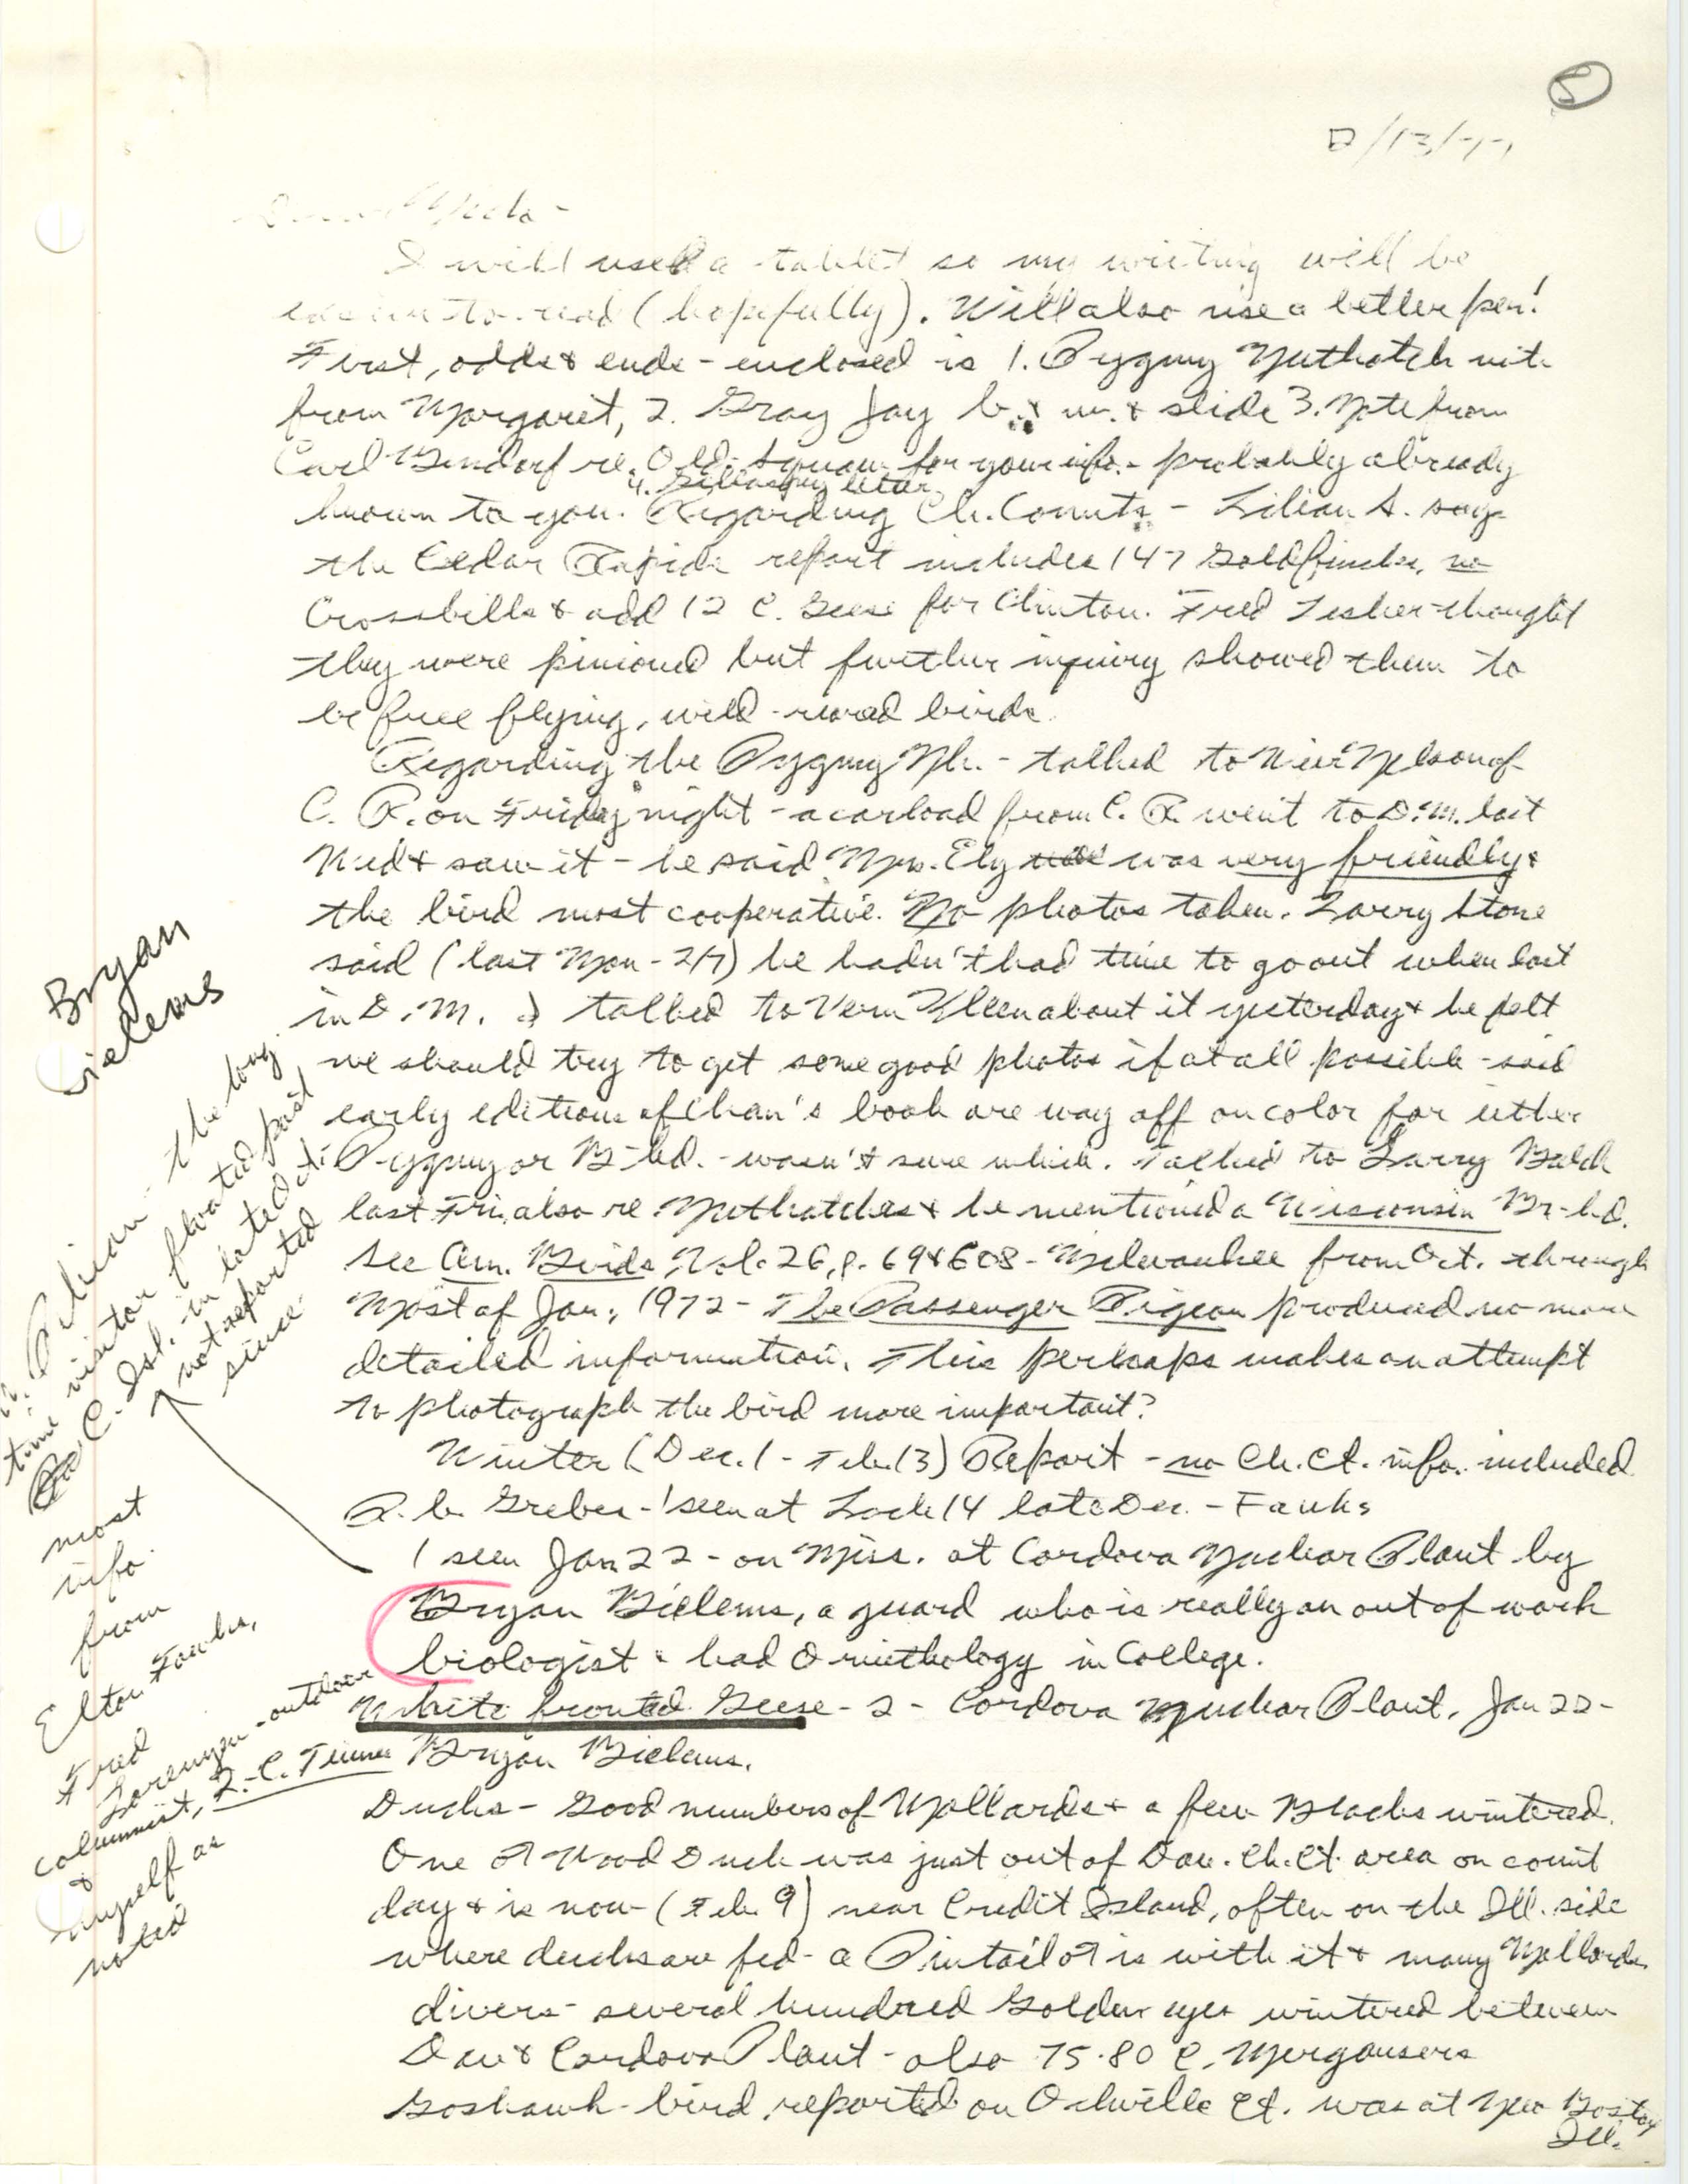 Peter C. Peterson letter to Nicholas S. Halmi regarding bird sighitings, February 13, 1977